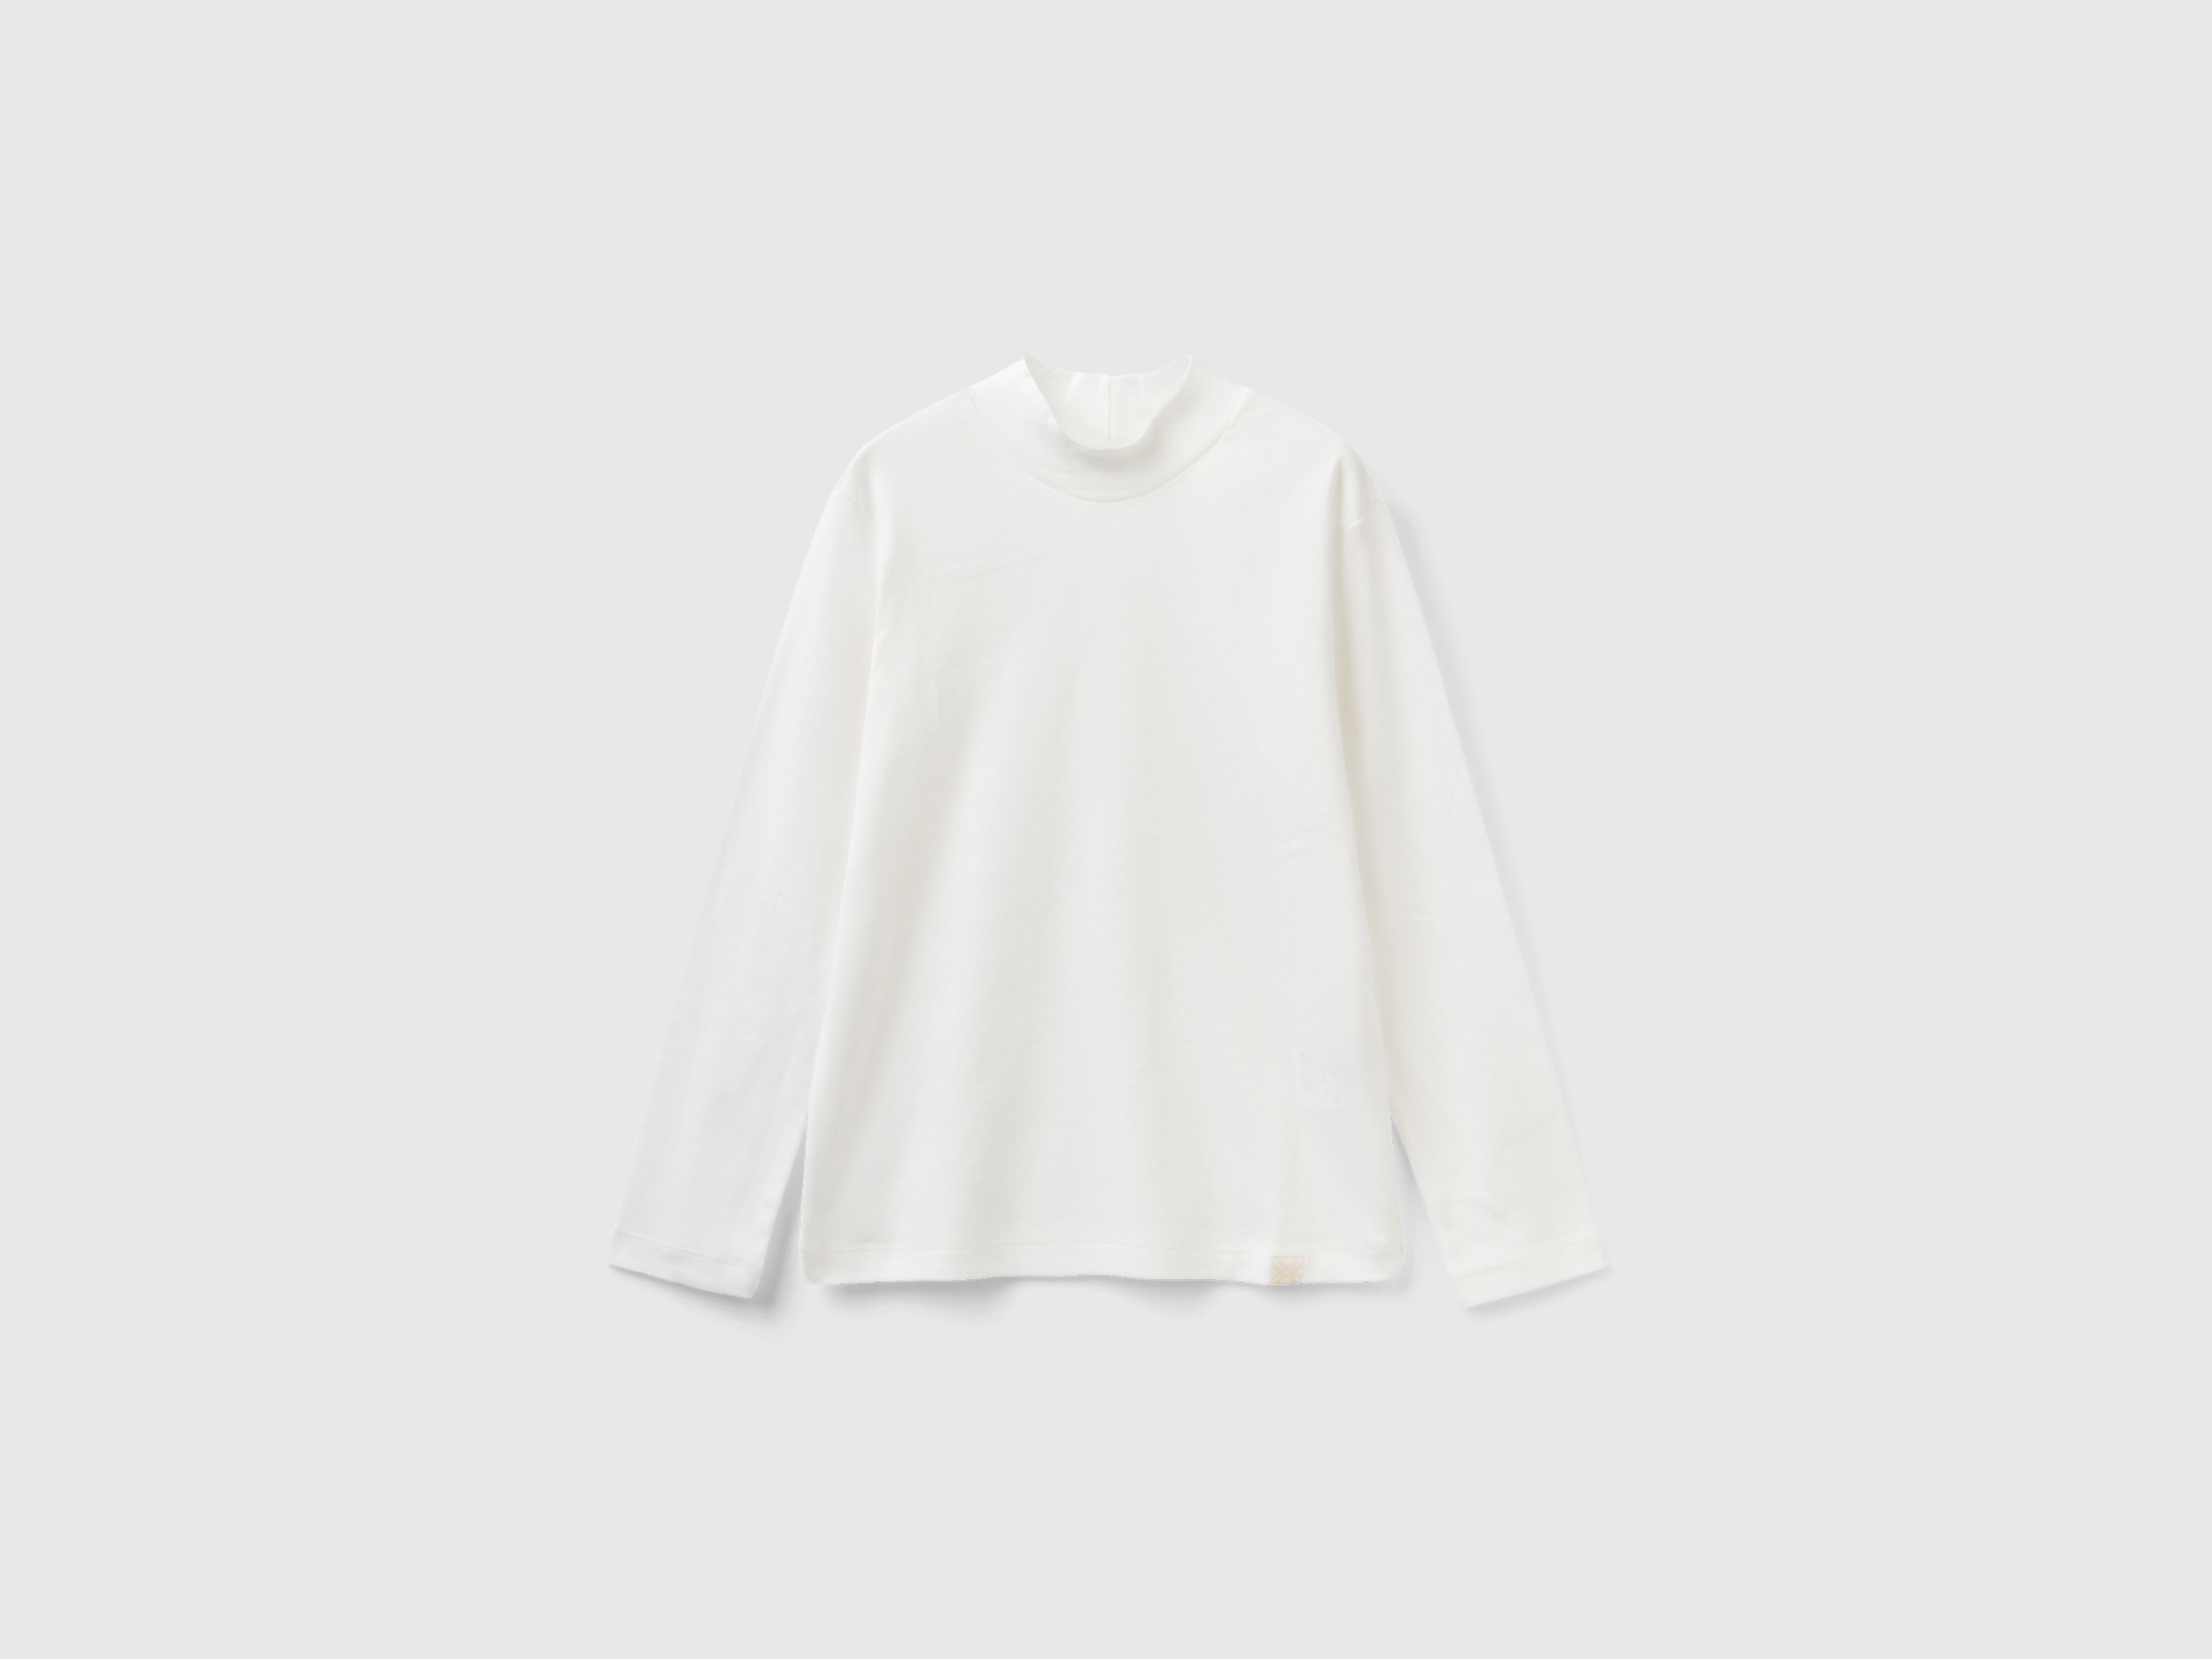 Benetton, Rubbed Knit Turtleneck T-shirt, size L, White, Kids